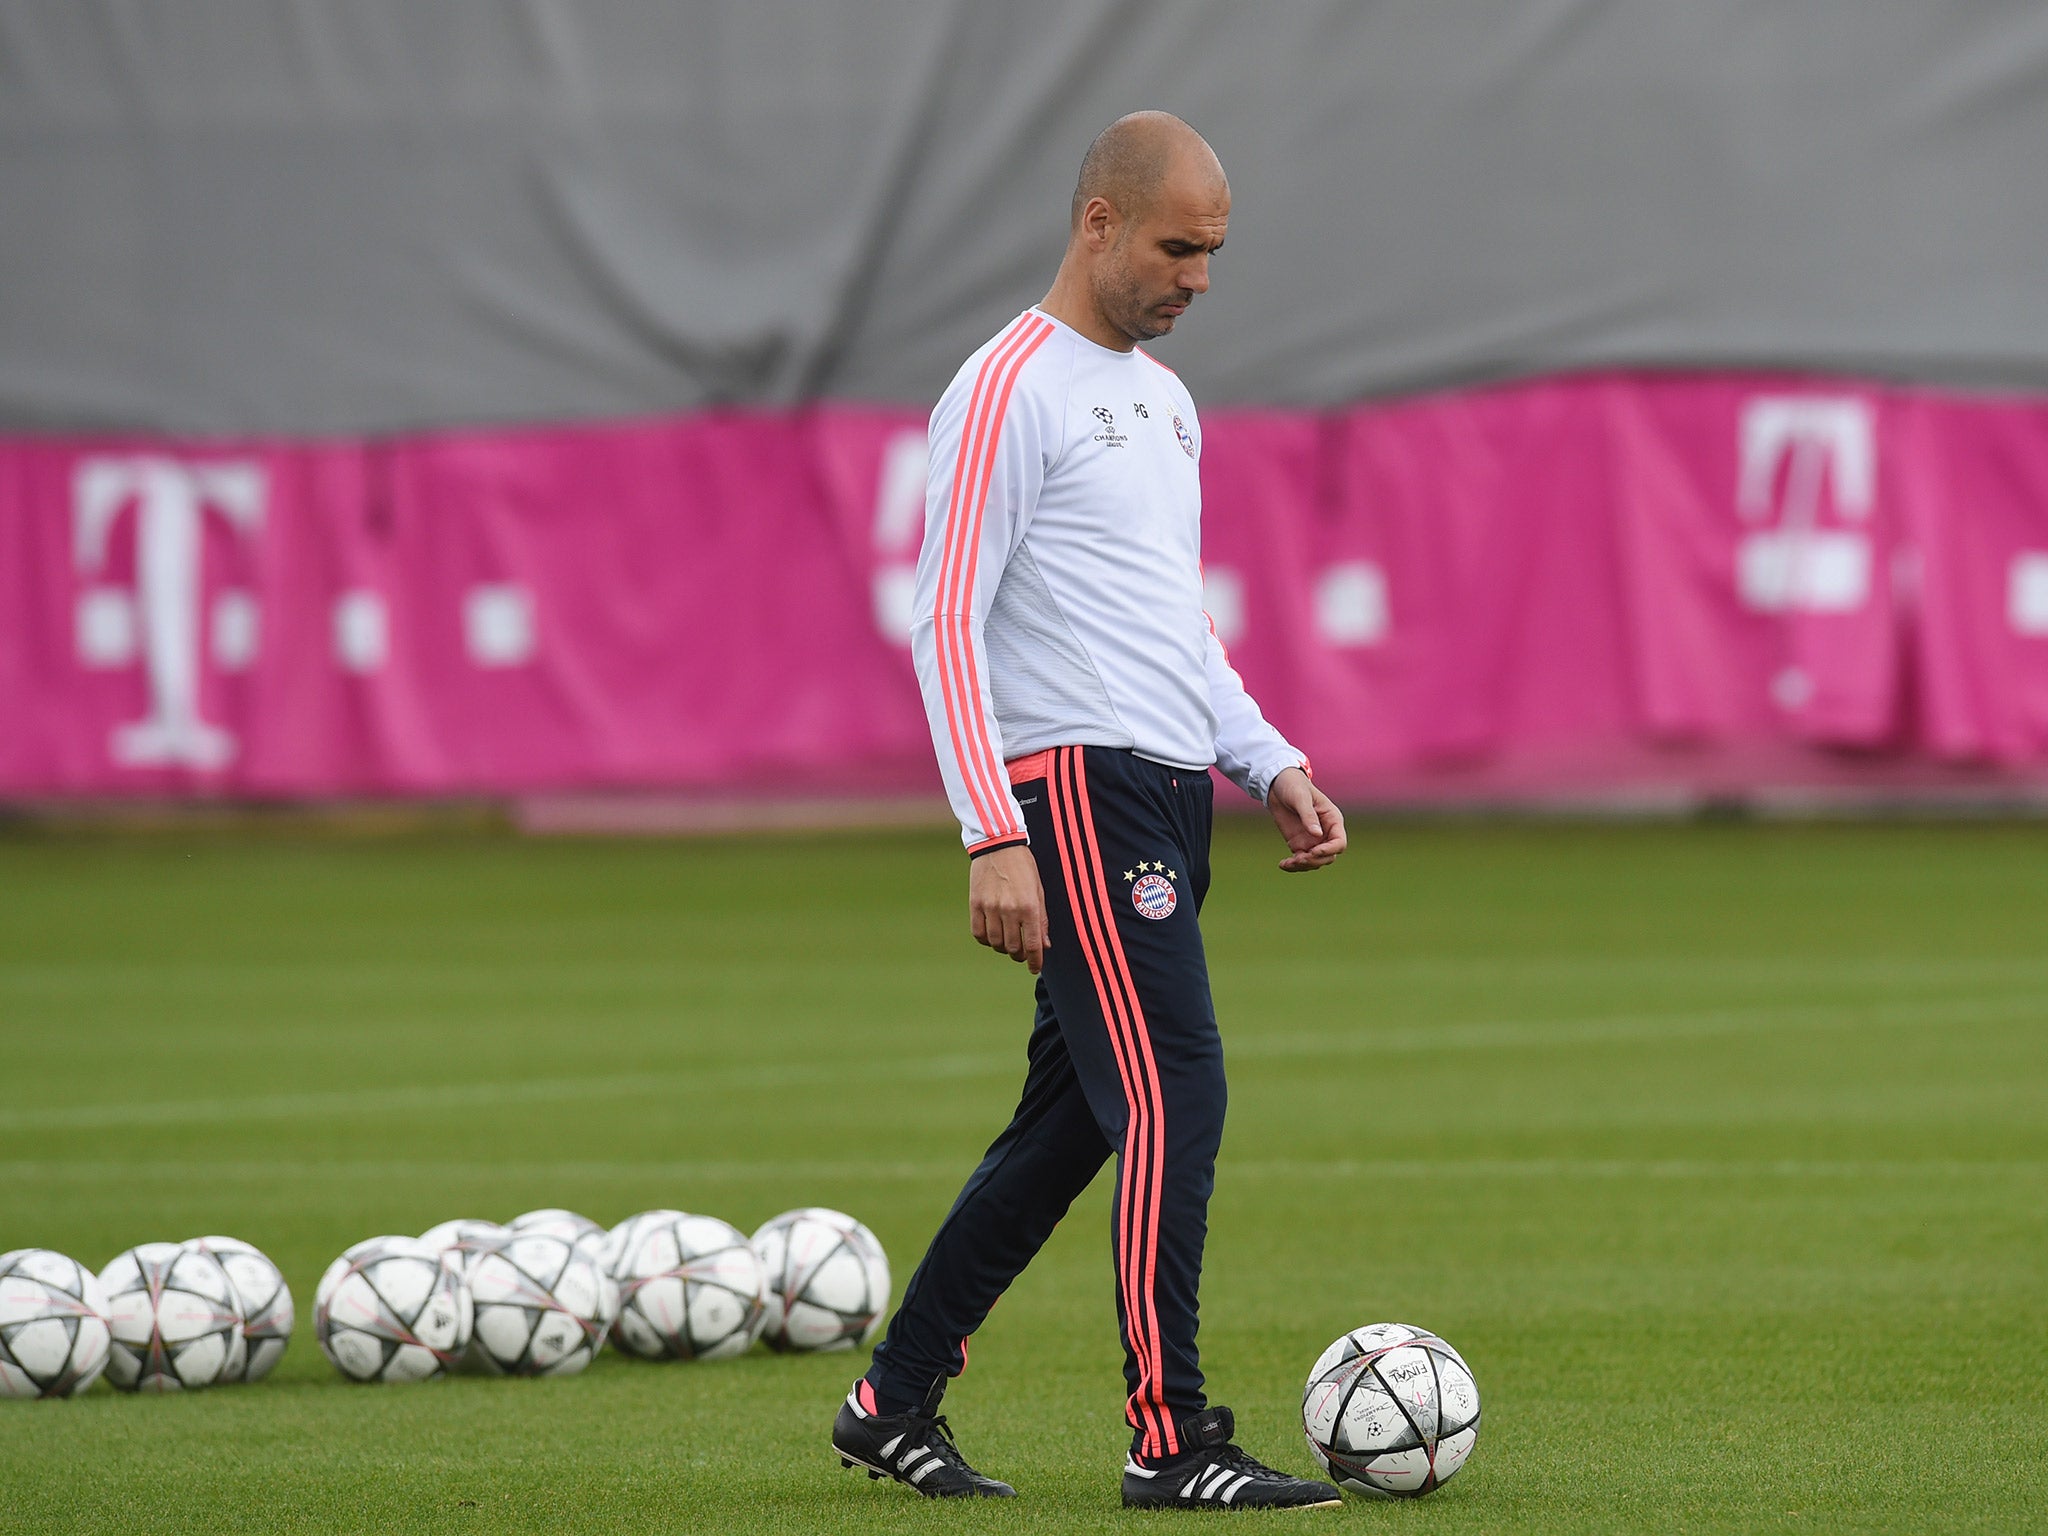 Bayern Munich manager Pep Guardiola is under pressure to emulate Jupp Heynckes